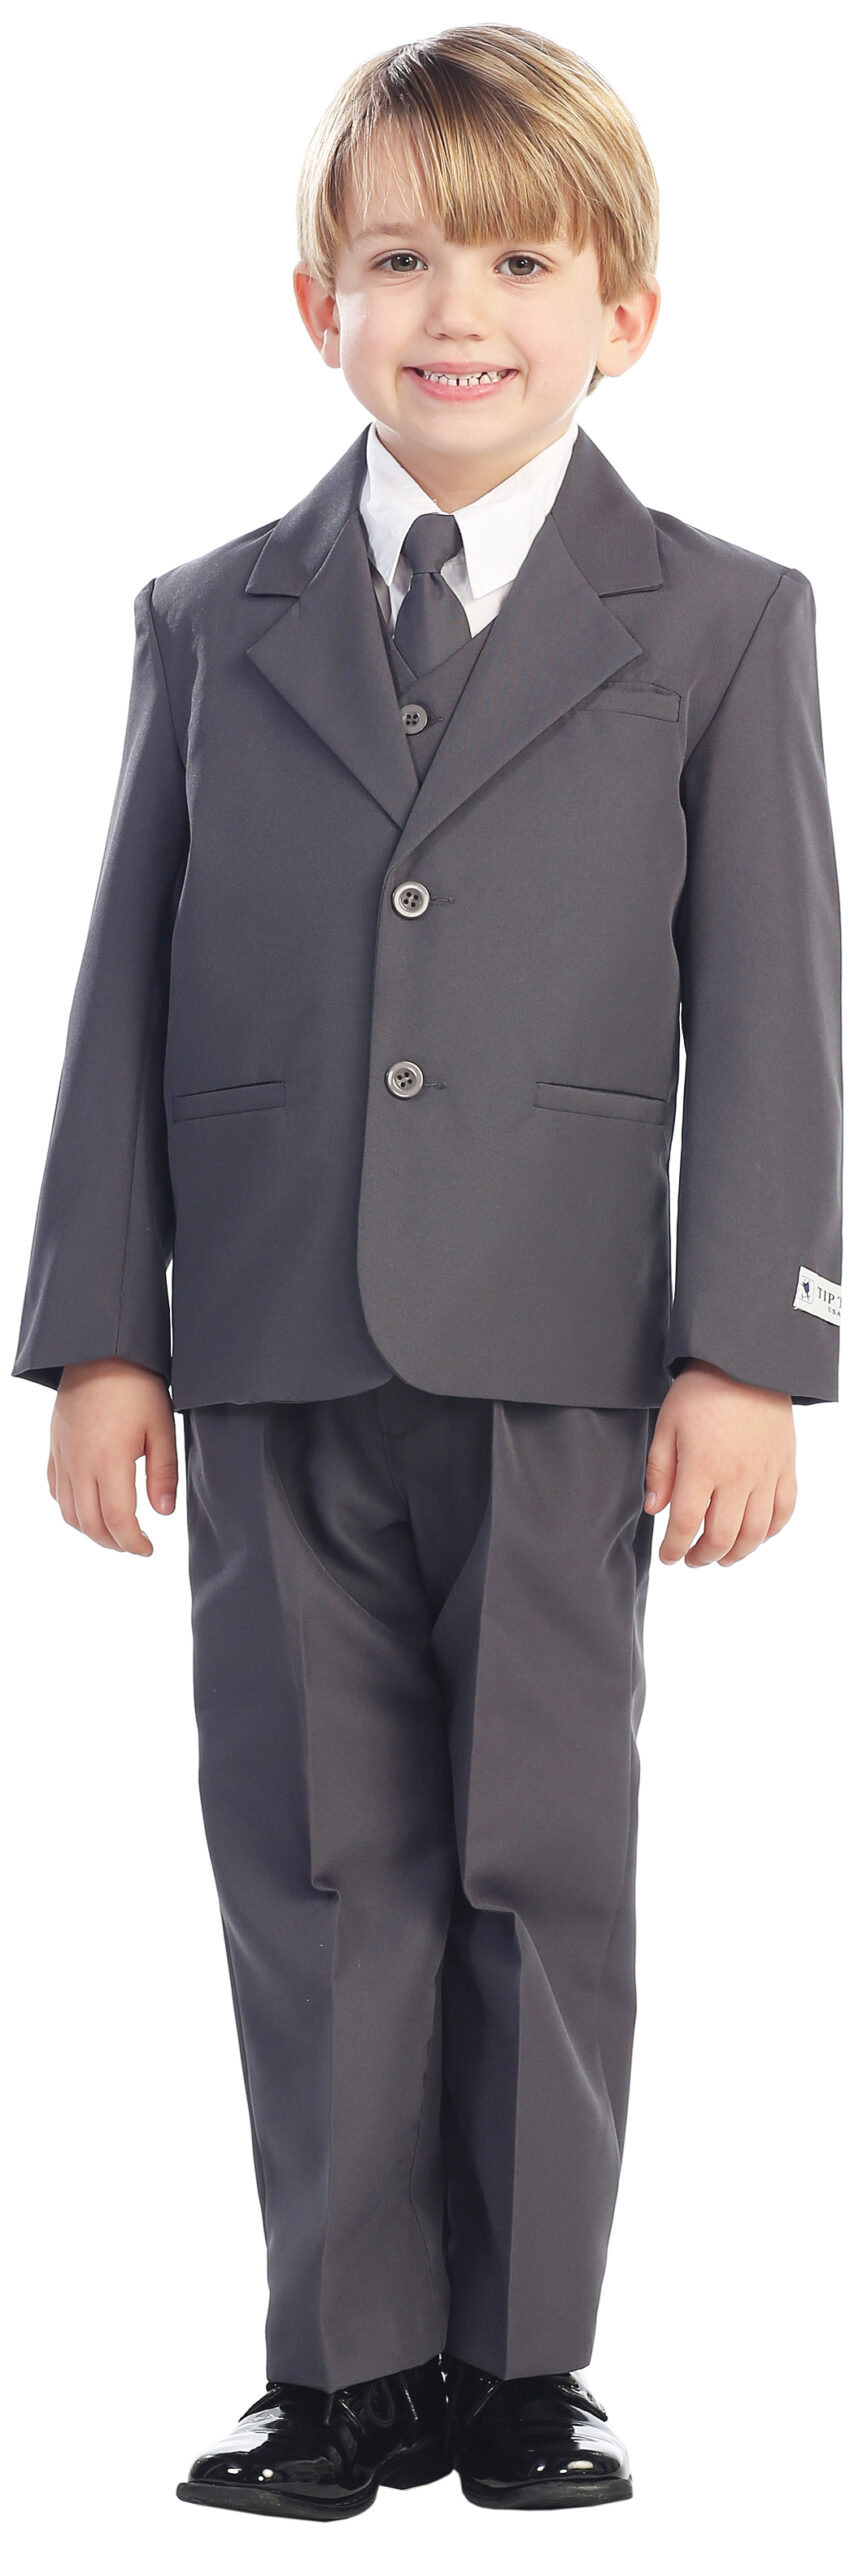 Avery Hill 5-Piece Boy's 2-Button Dress Suit Full-Back Vest - Charcoal Grey Size 5